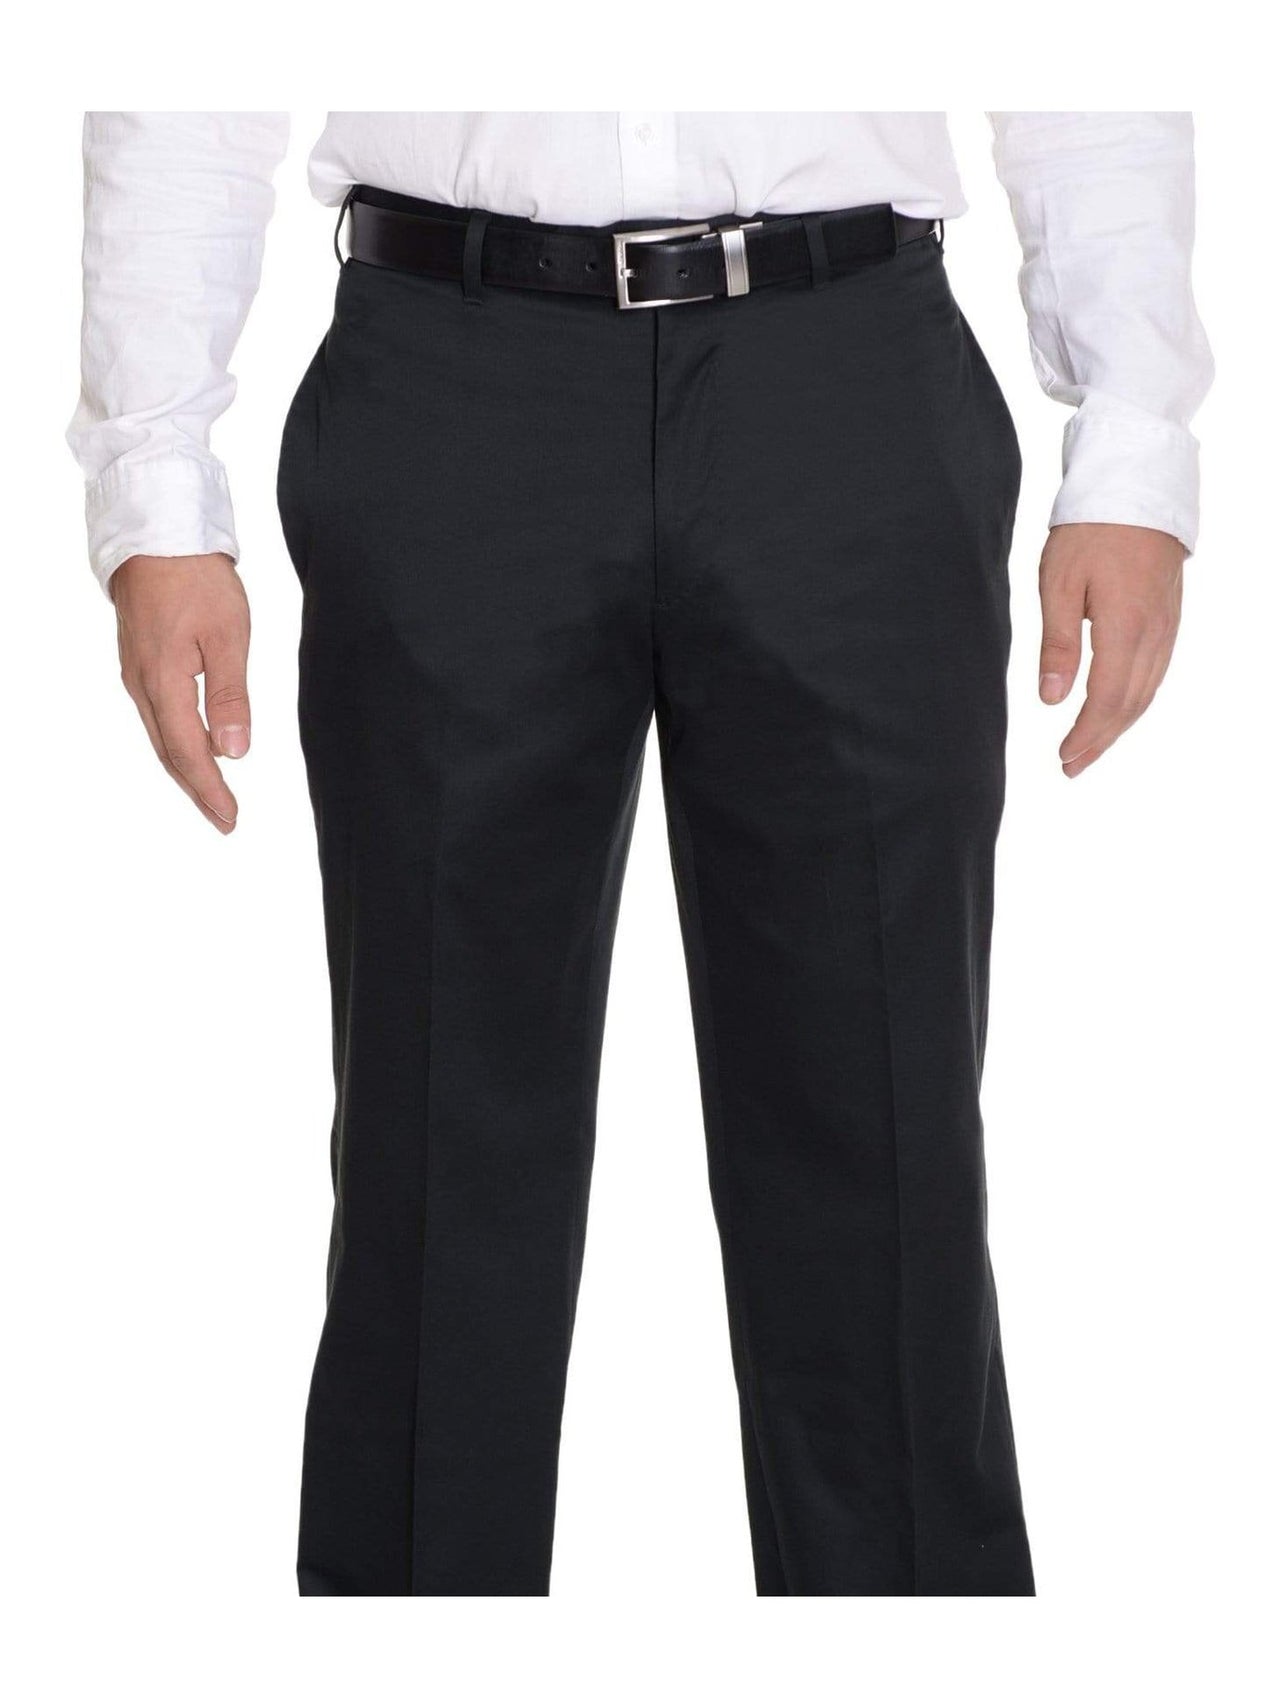 Bloomingdale's PANTS 32W Bloomingdale's Classic Fit Solid Black Flat Front Cotton Washable Dress Pants